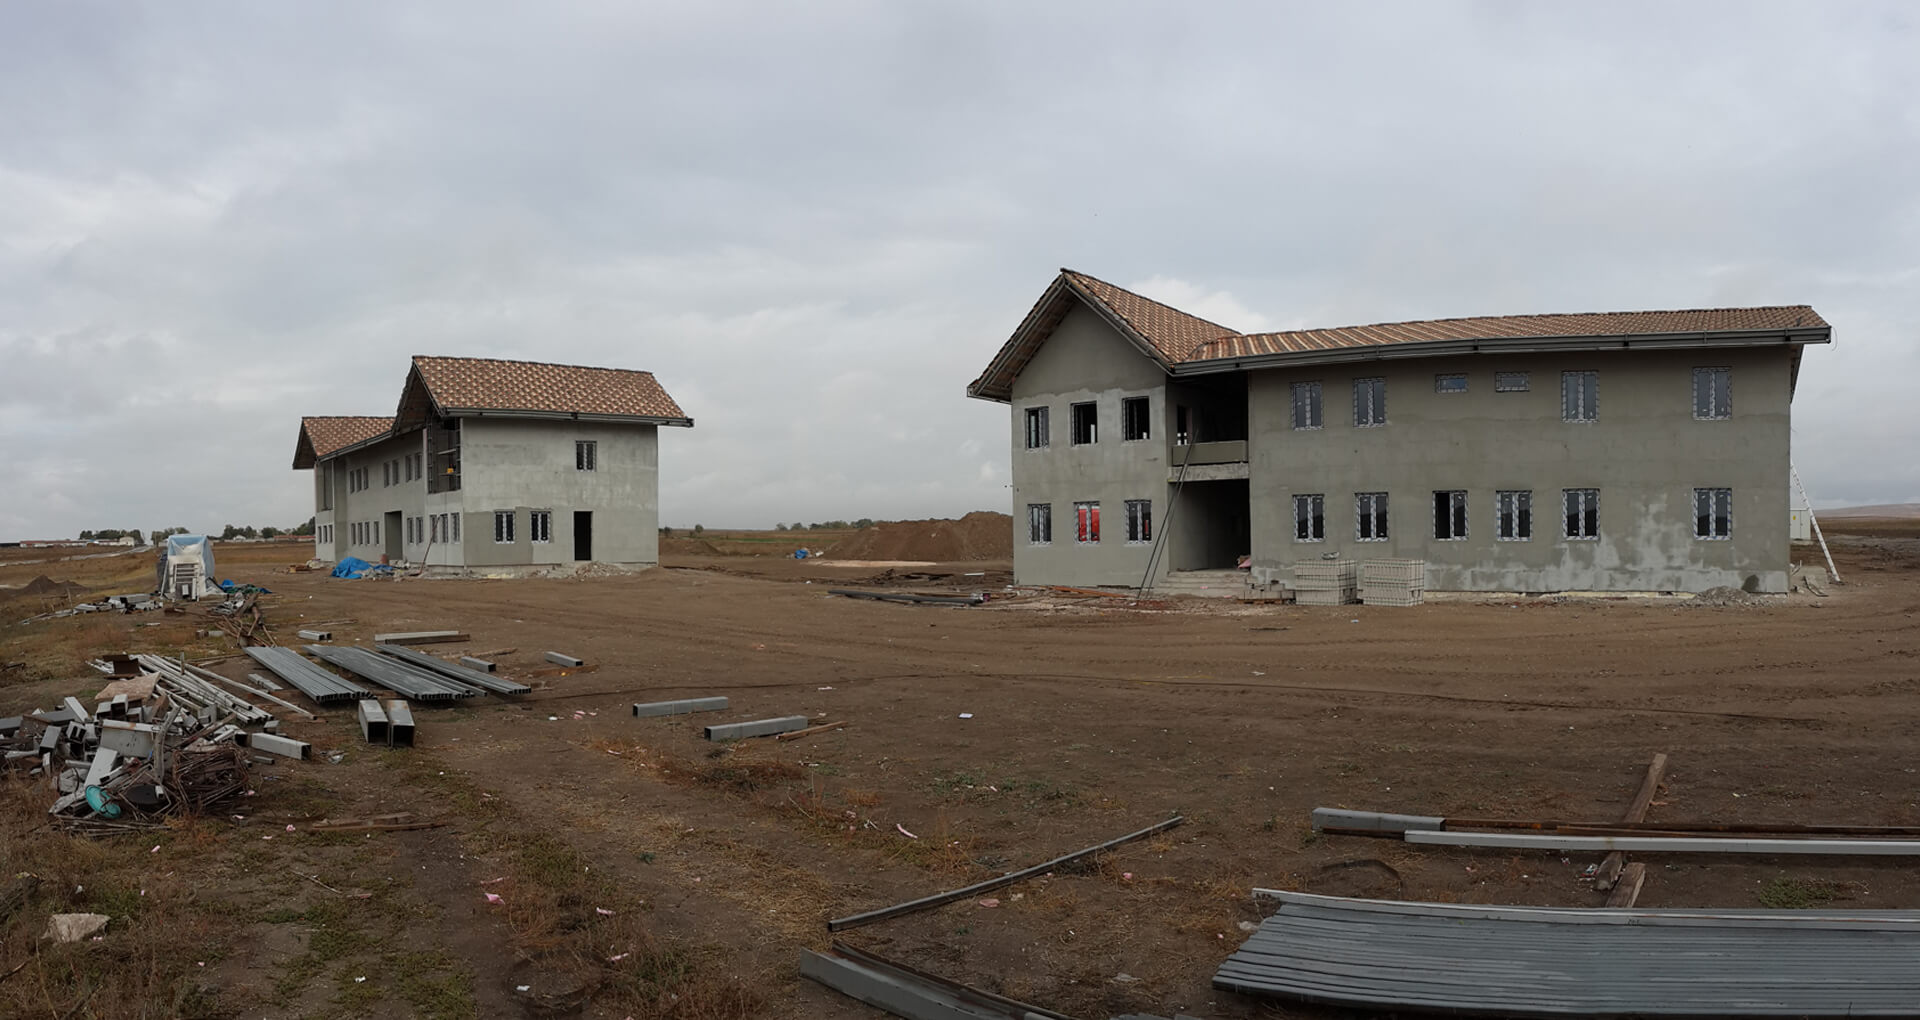 Adatarım Farm Administrative and Accommodation Buildings